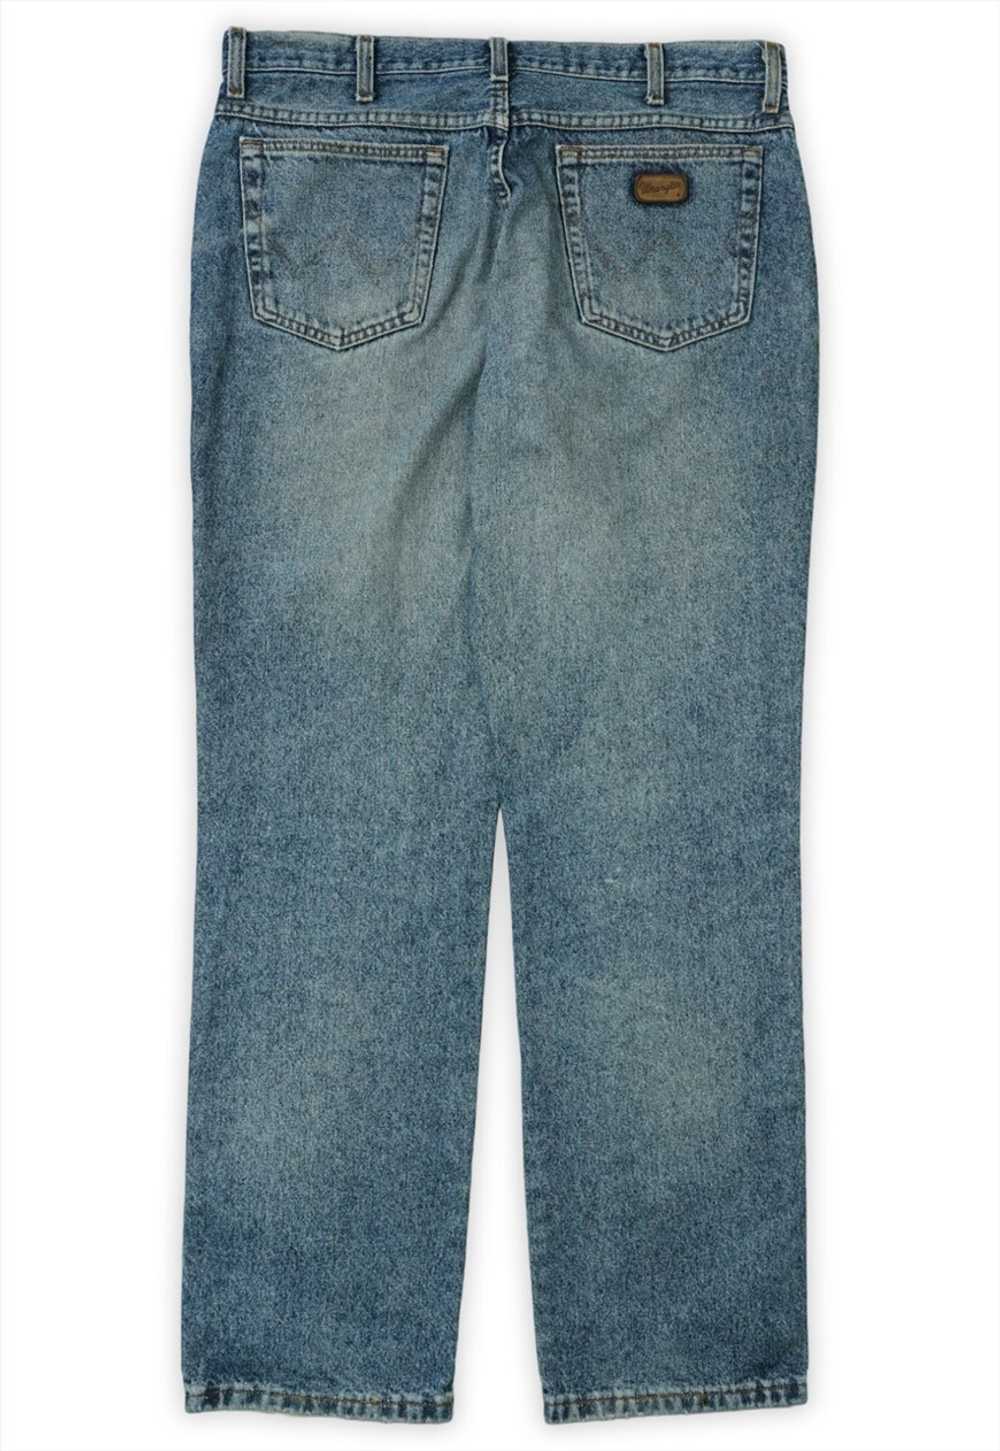 Vintage Wrangler Texas Blue Jeans Mens - image 2